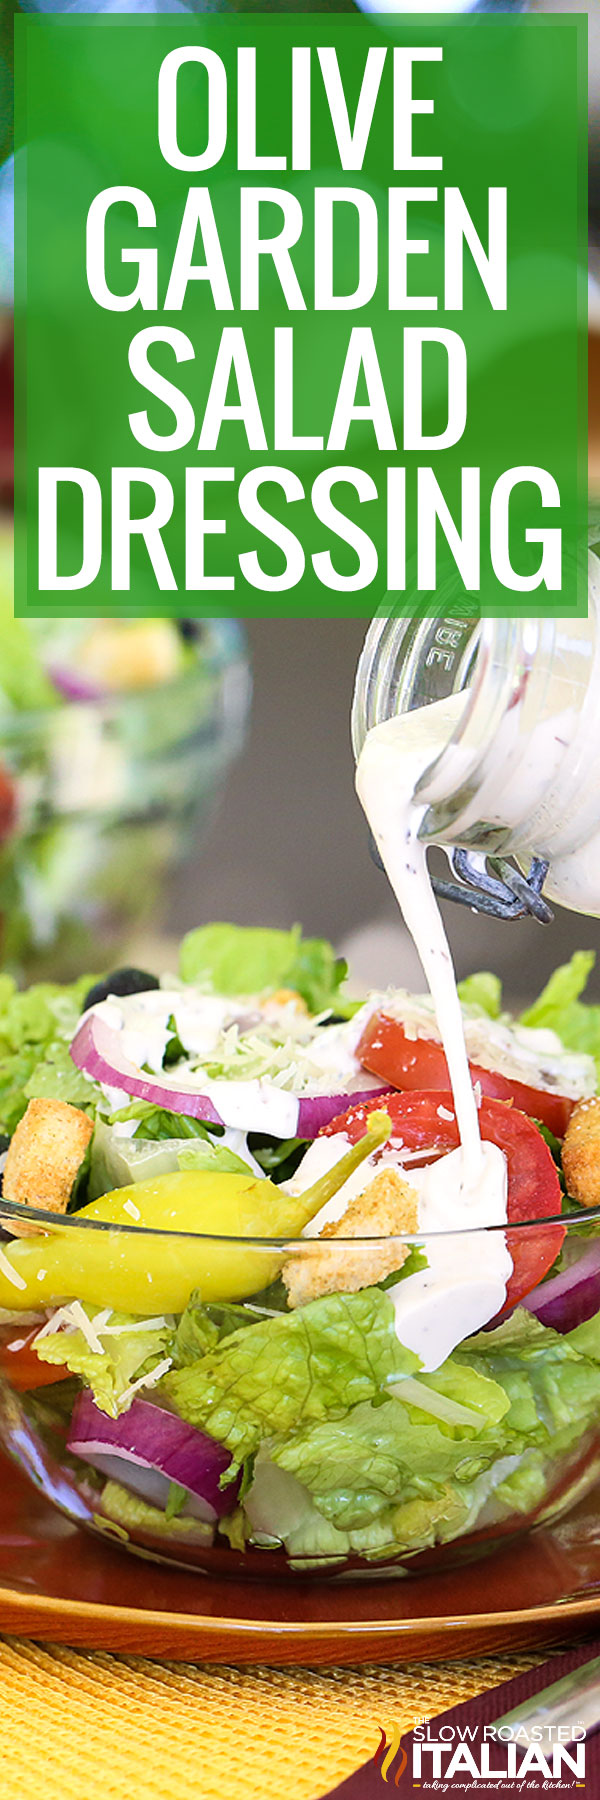 Top Secret Recipes  Olive Garden Italian Salad Dressing Fat-Free